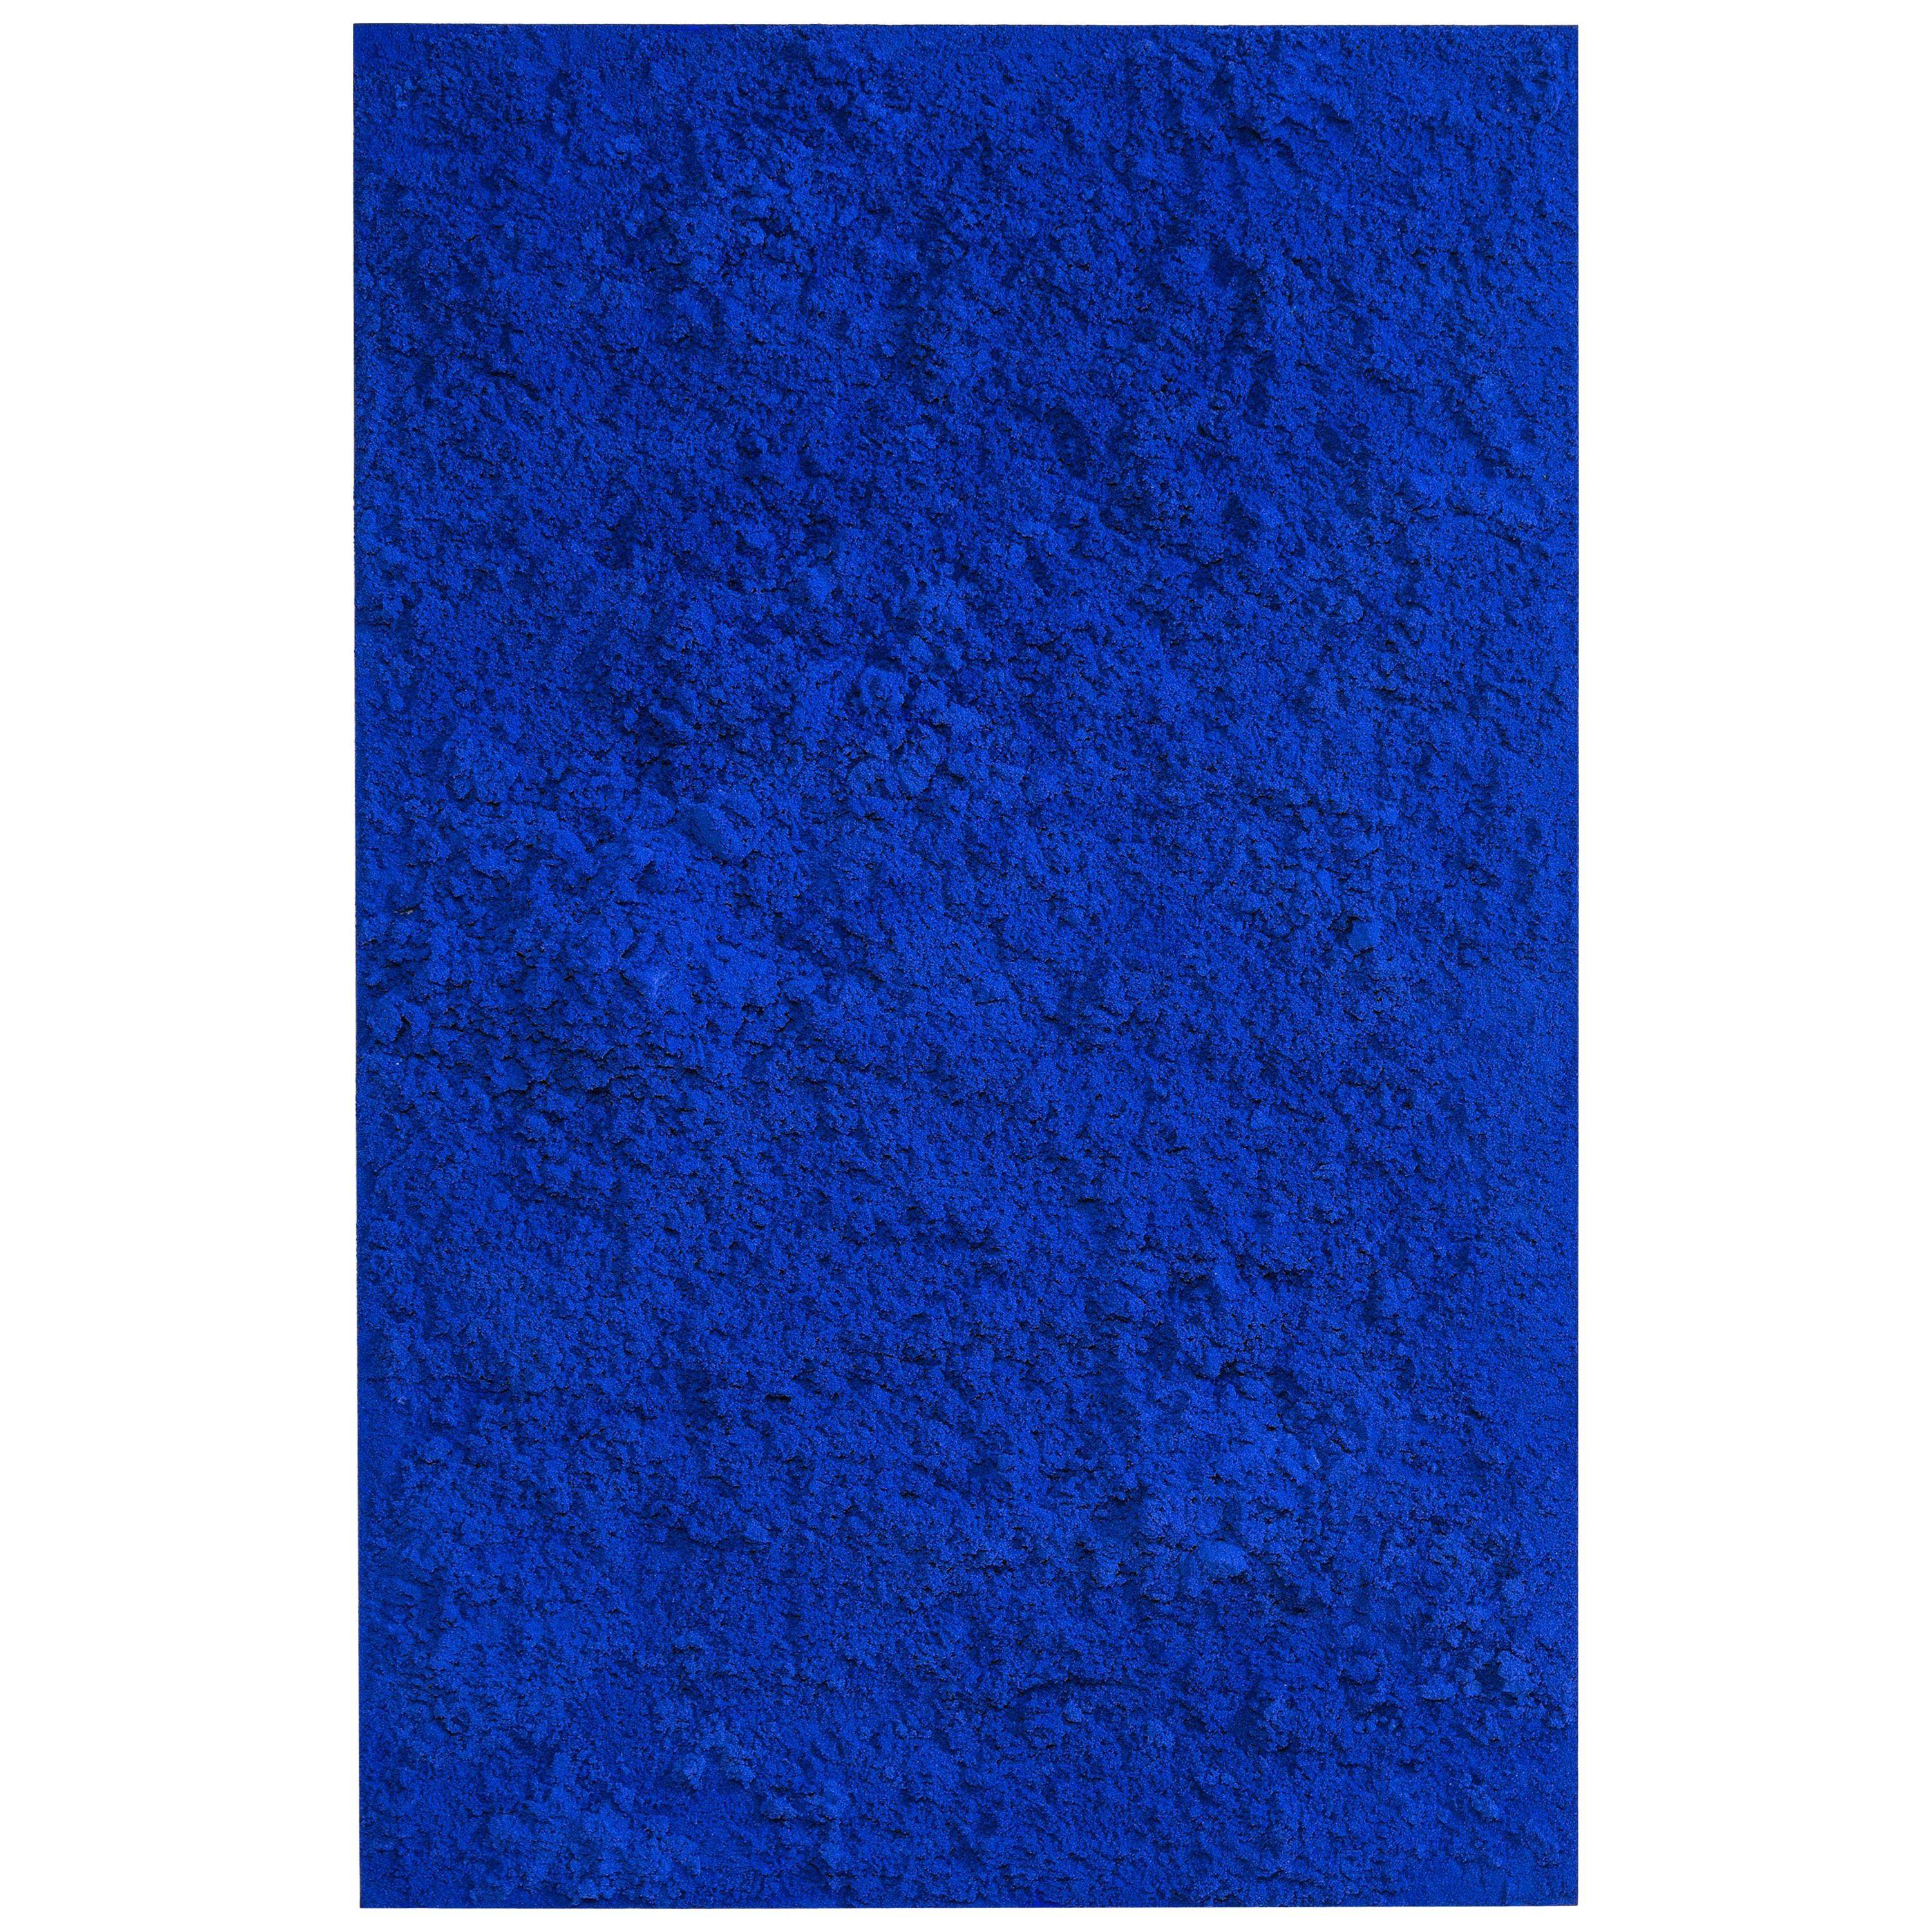 Terra Blue, Sand by Fernando Mastrangelo, New York